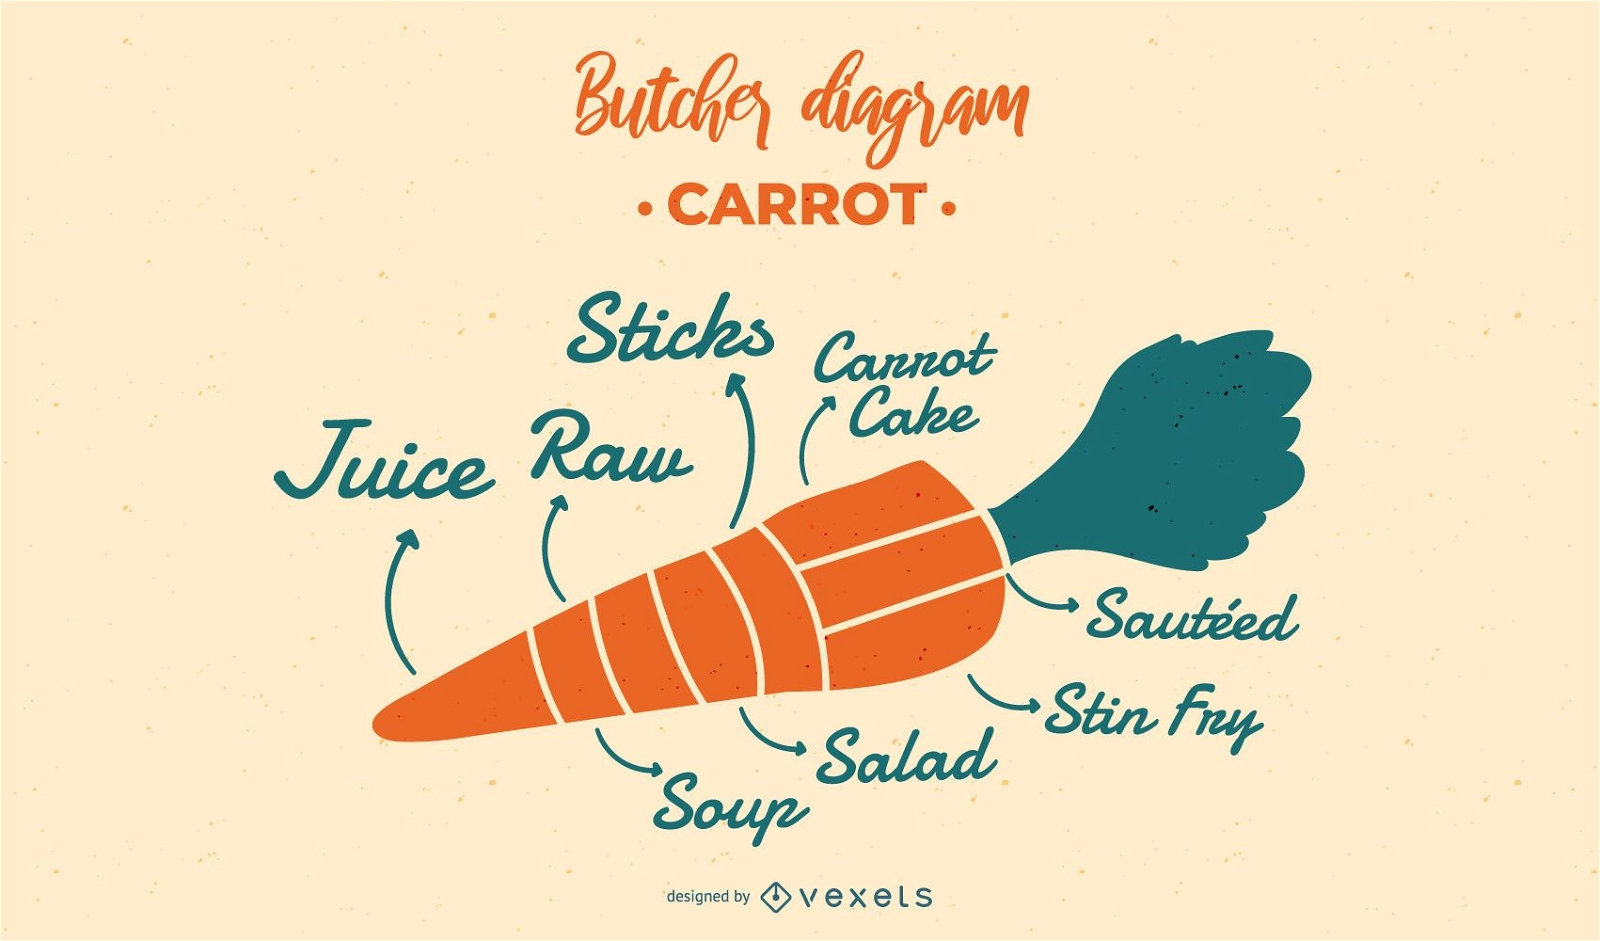 Carrot Butcher Diagram Design